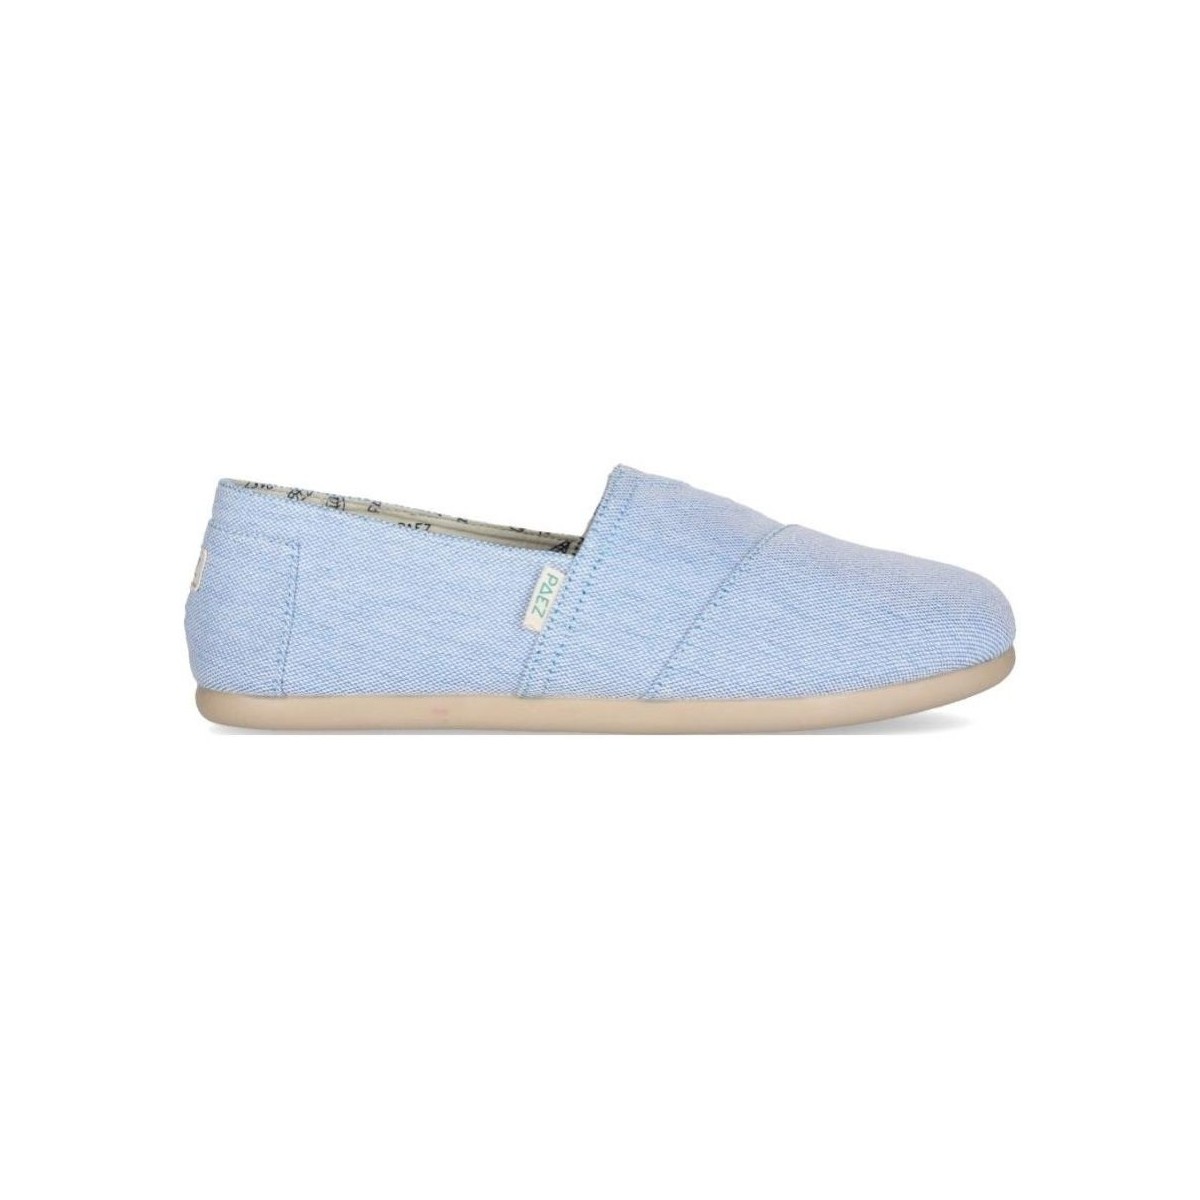 Schuhe Herren Leinen-Pantoletten mit gefloch Paez Gum Classic M - Combi Light Blue Blau